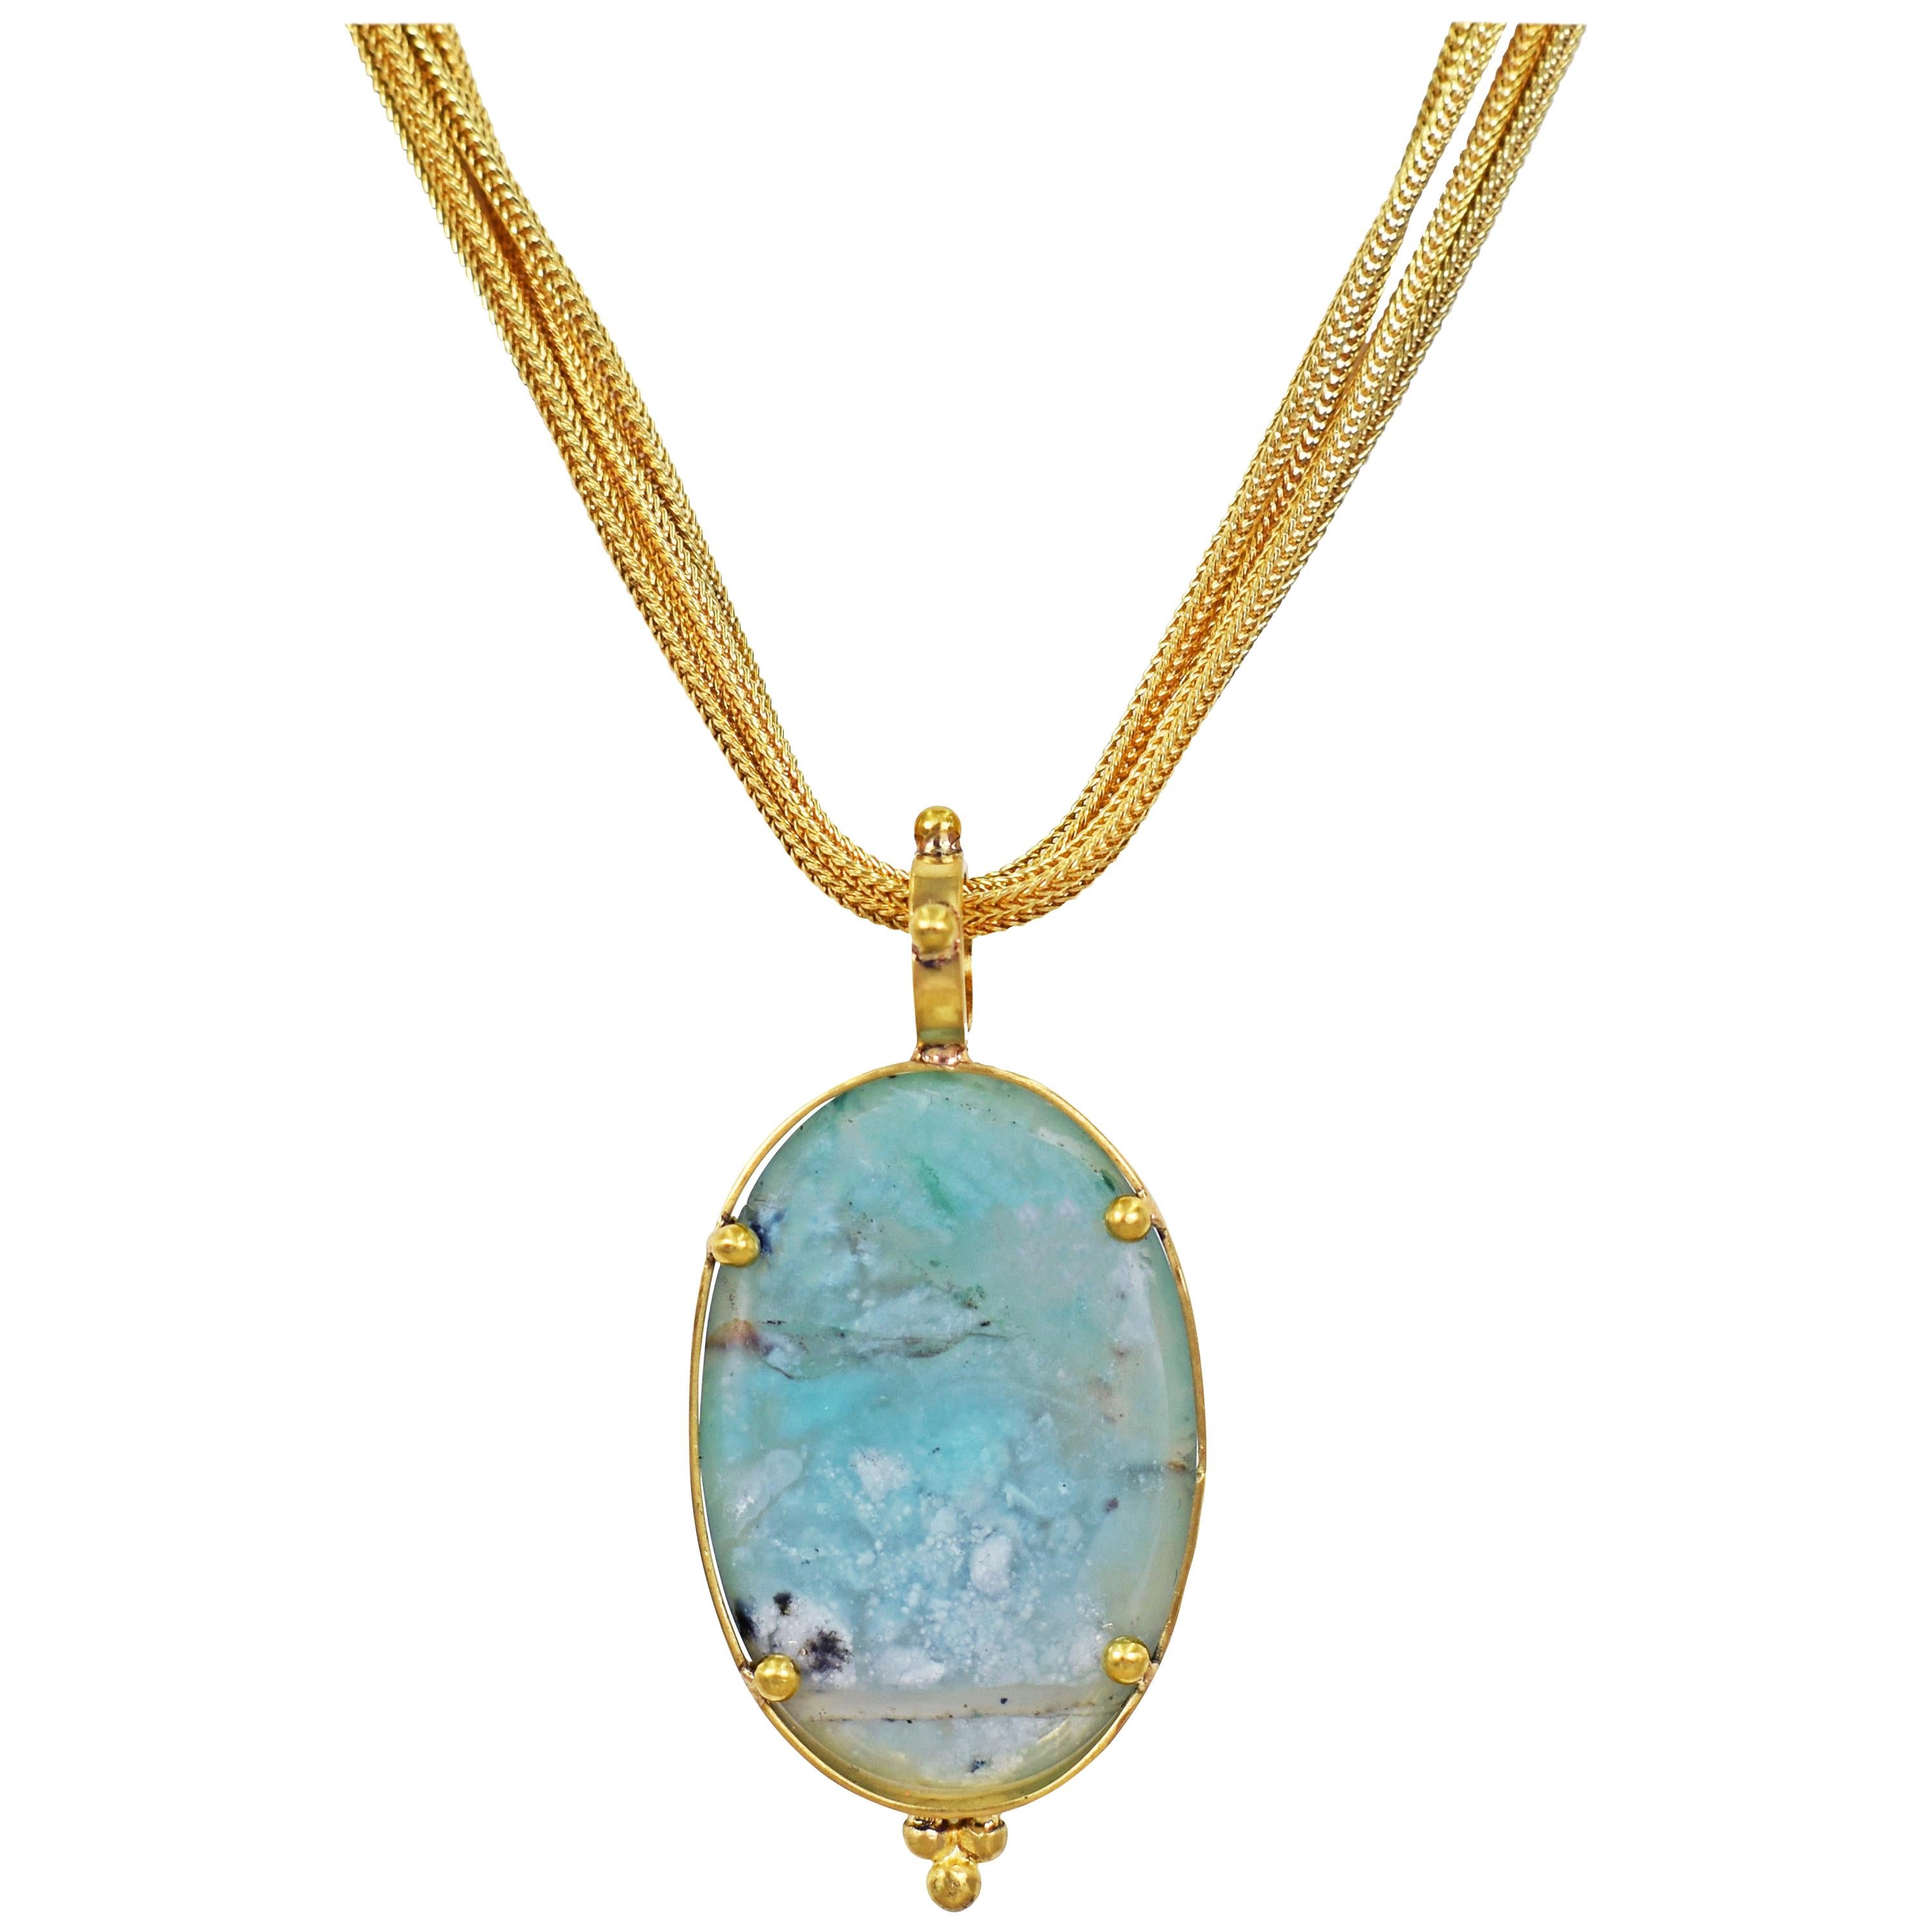 Aquaprase 22 Karat Gold Pendant on Four-Strand Chain Necklace For Sale